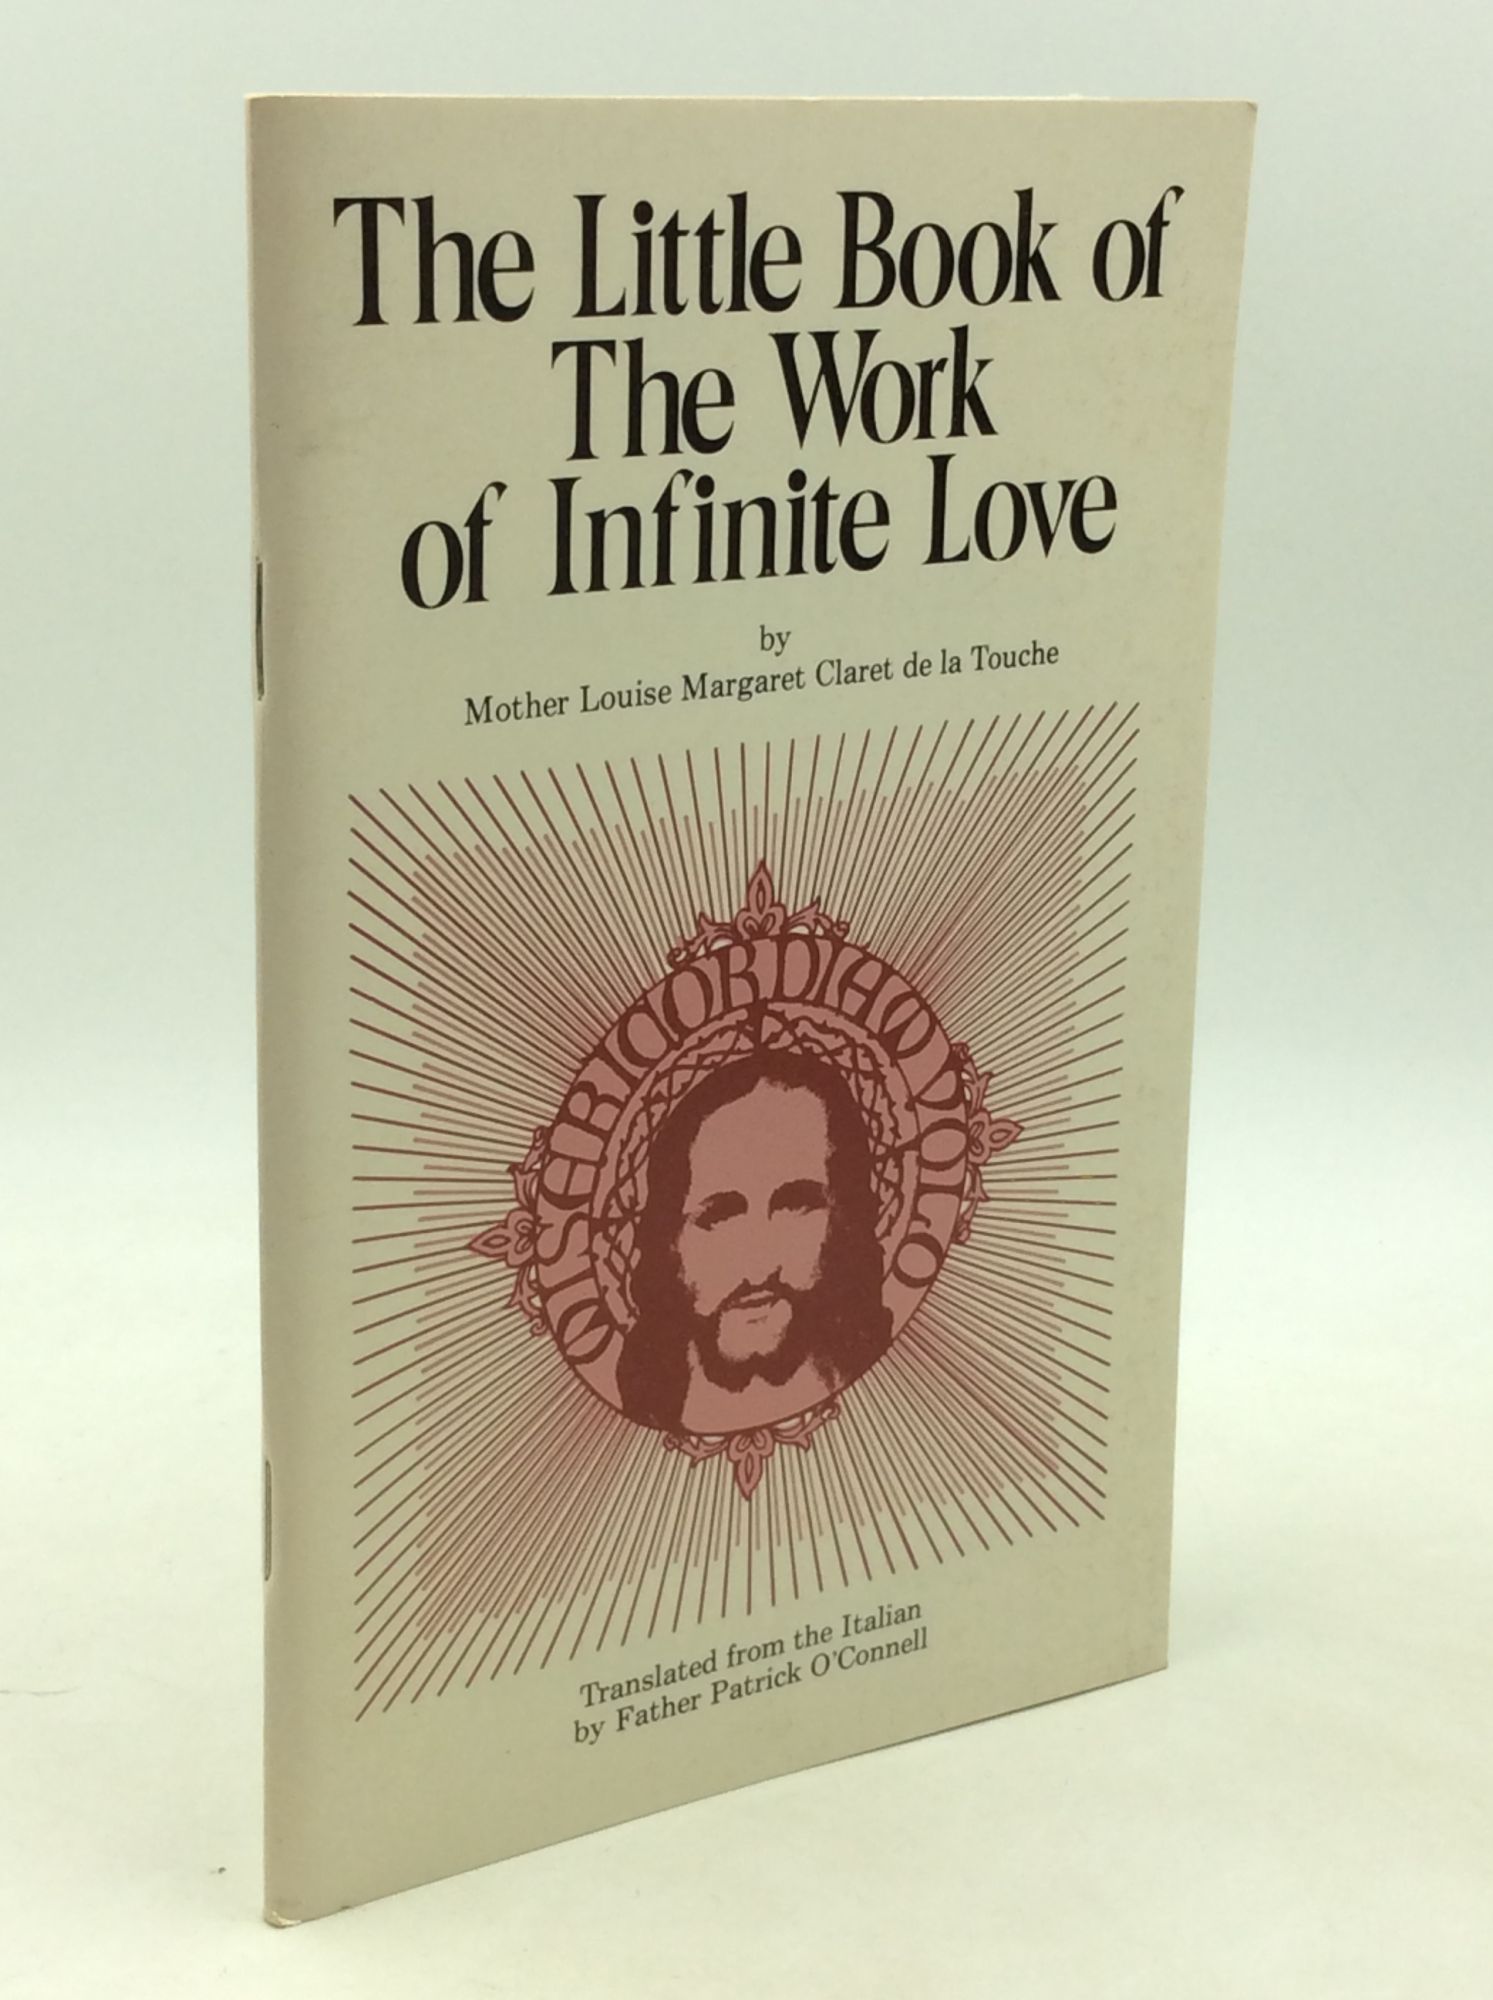 THE LITTLE BOOK OF THE WORK OF INFINITE LOVE - Mother Louise Margaret Claret de la Touche